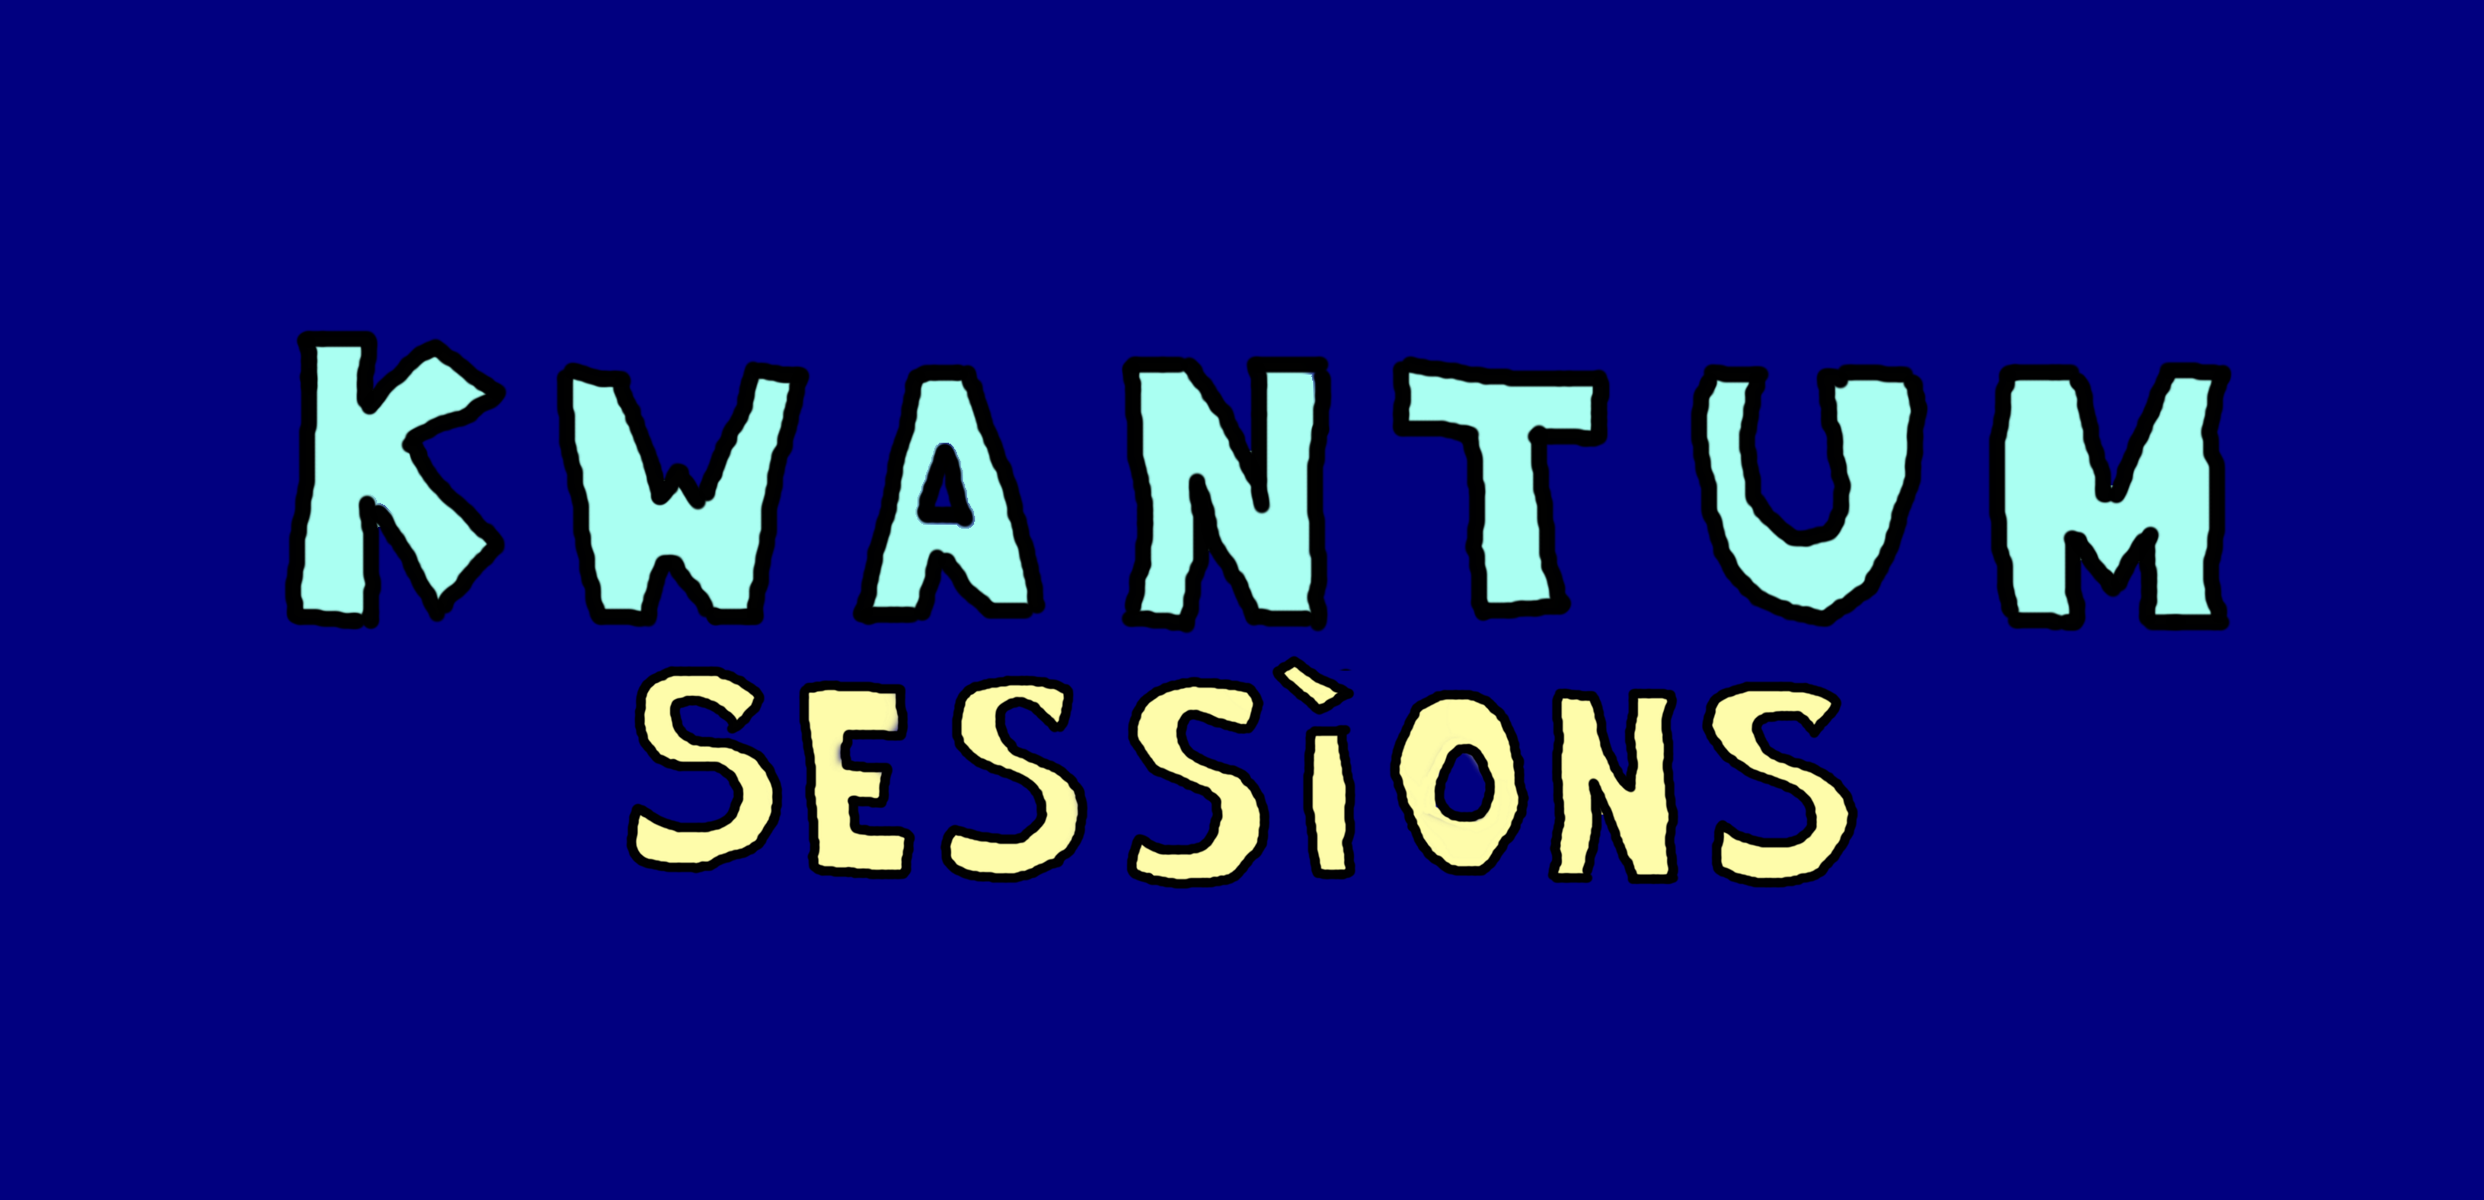 Logo kwantum sessions - blauw